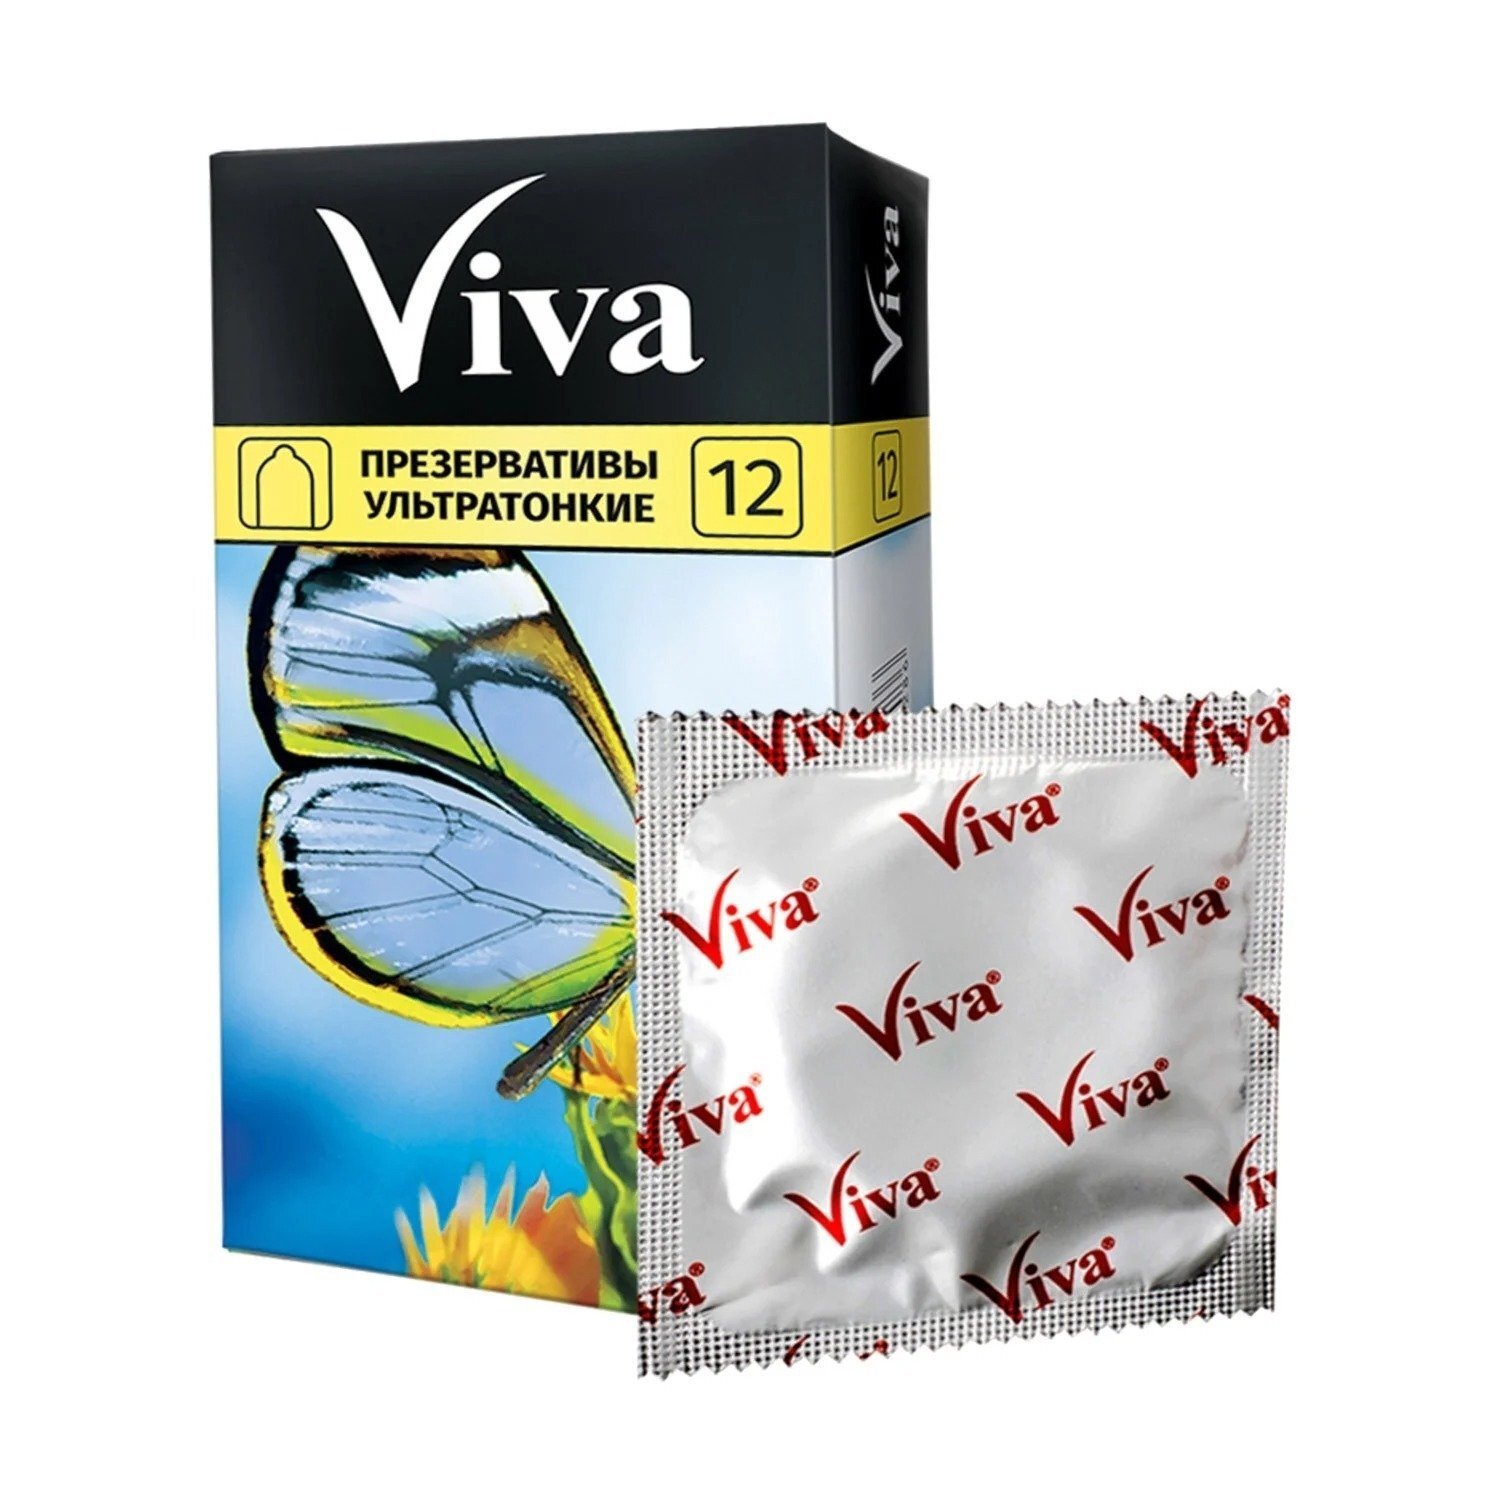 Презерватив VIVA №12 ультратонкие фото 1